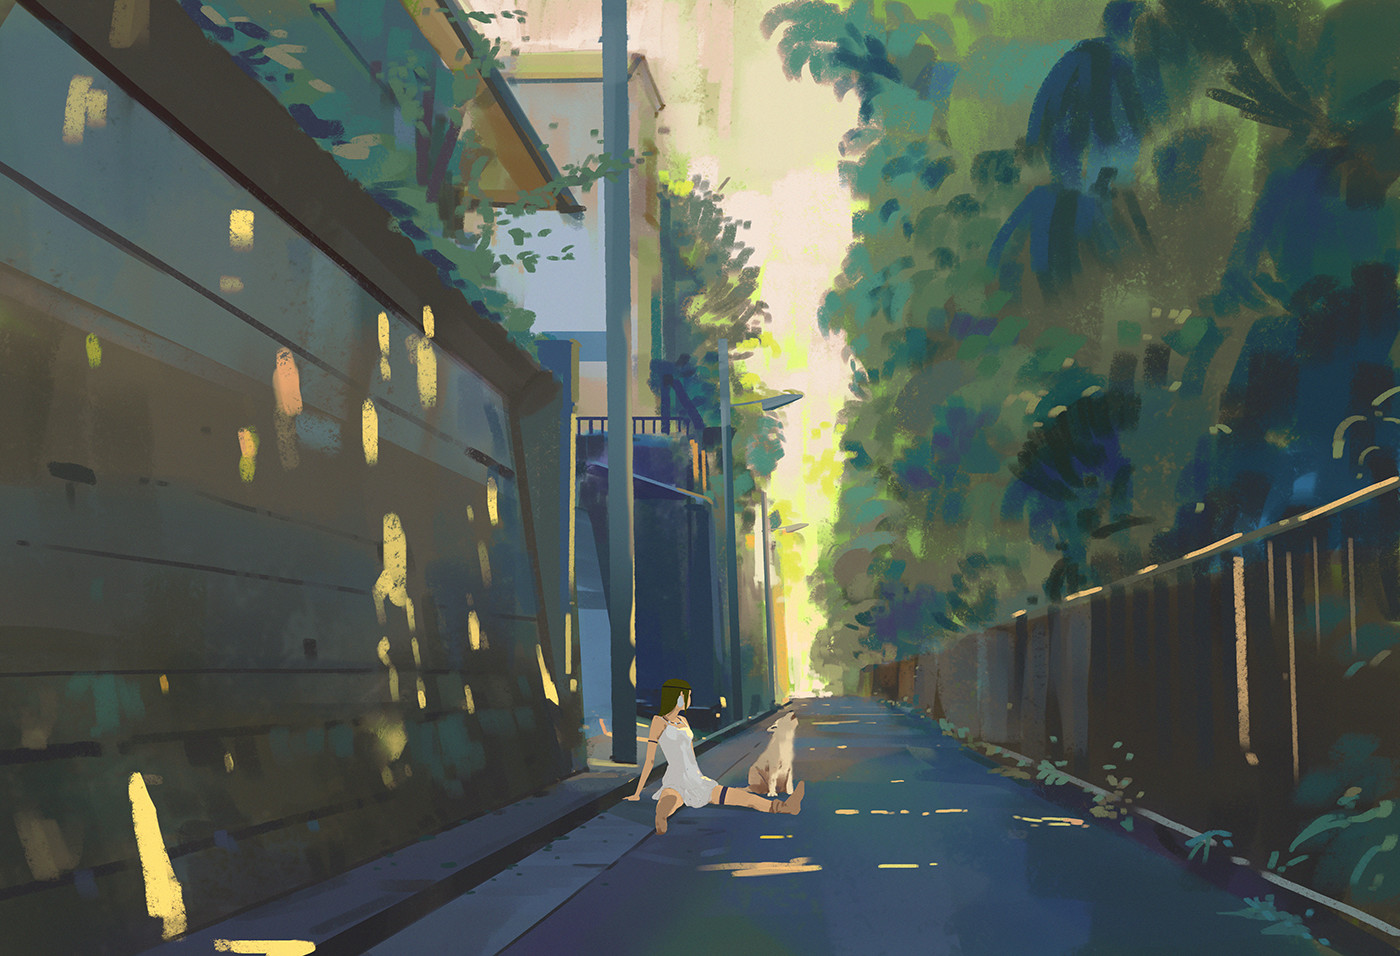 Studio Ghibli Inspired Artwork by Atey Ghailan | Concept Art World